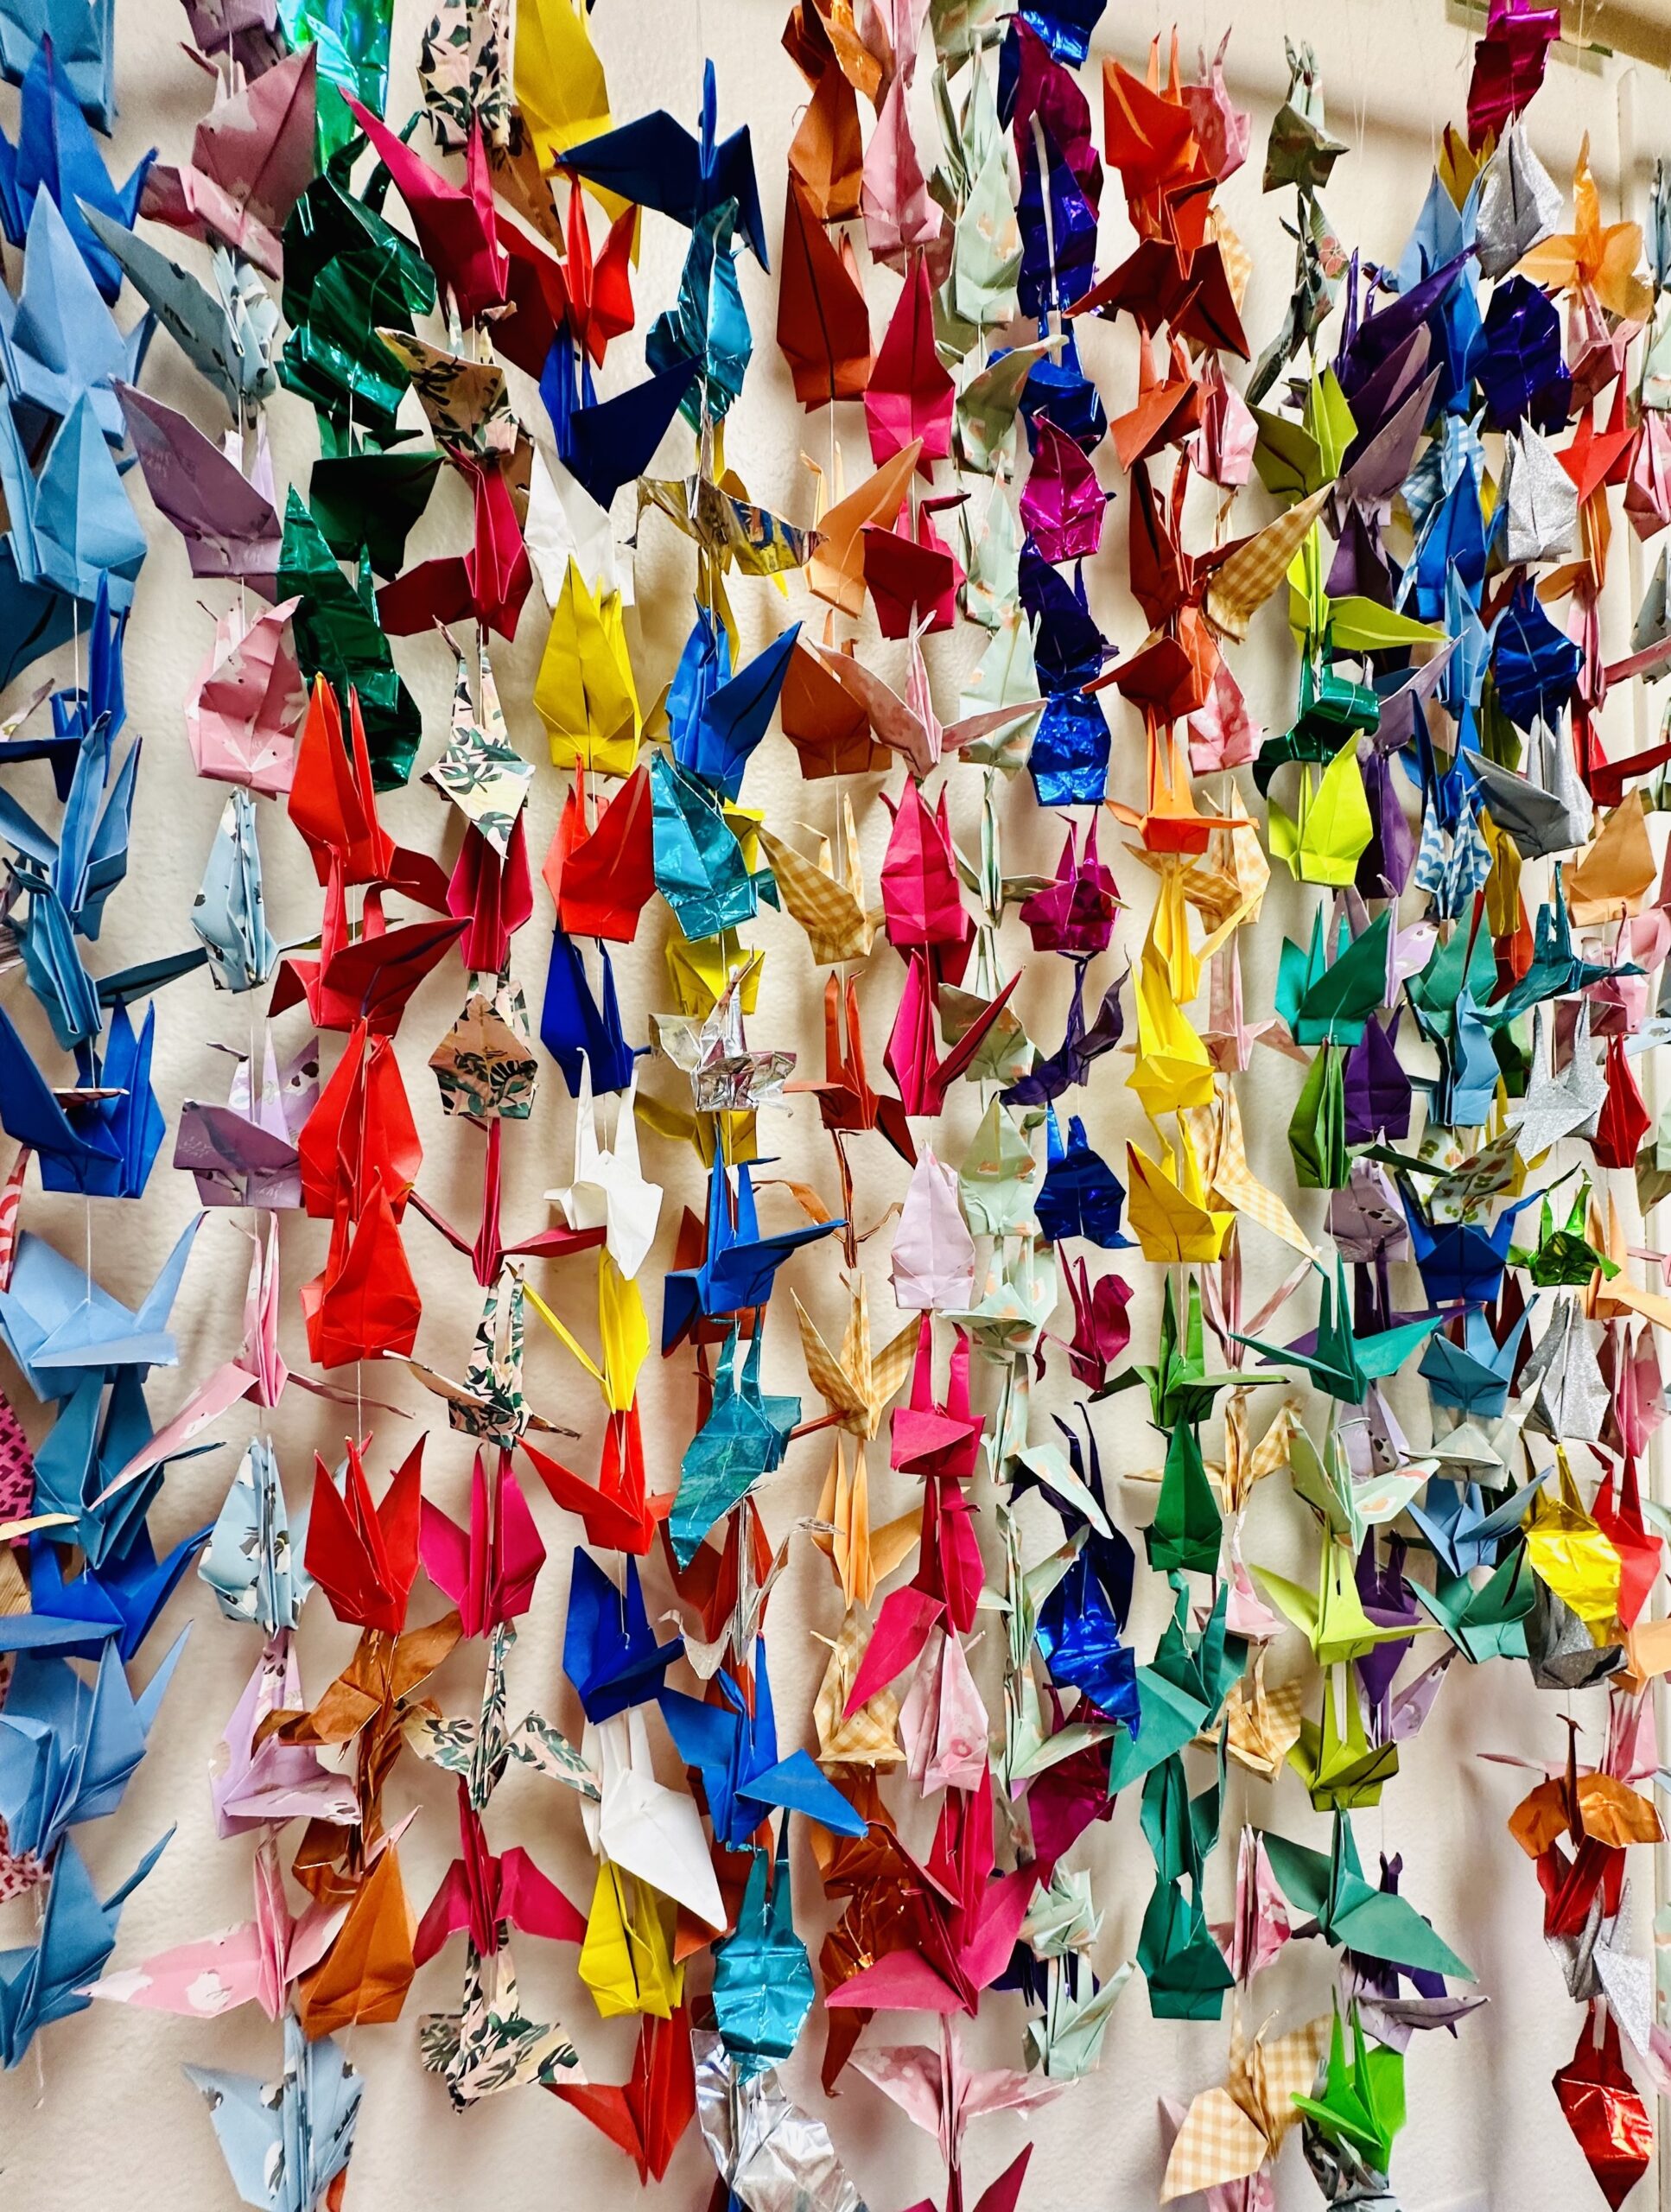 Origami cranes. 